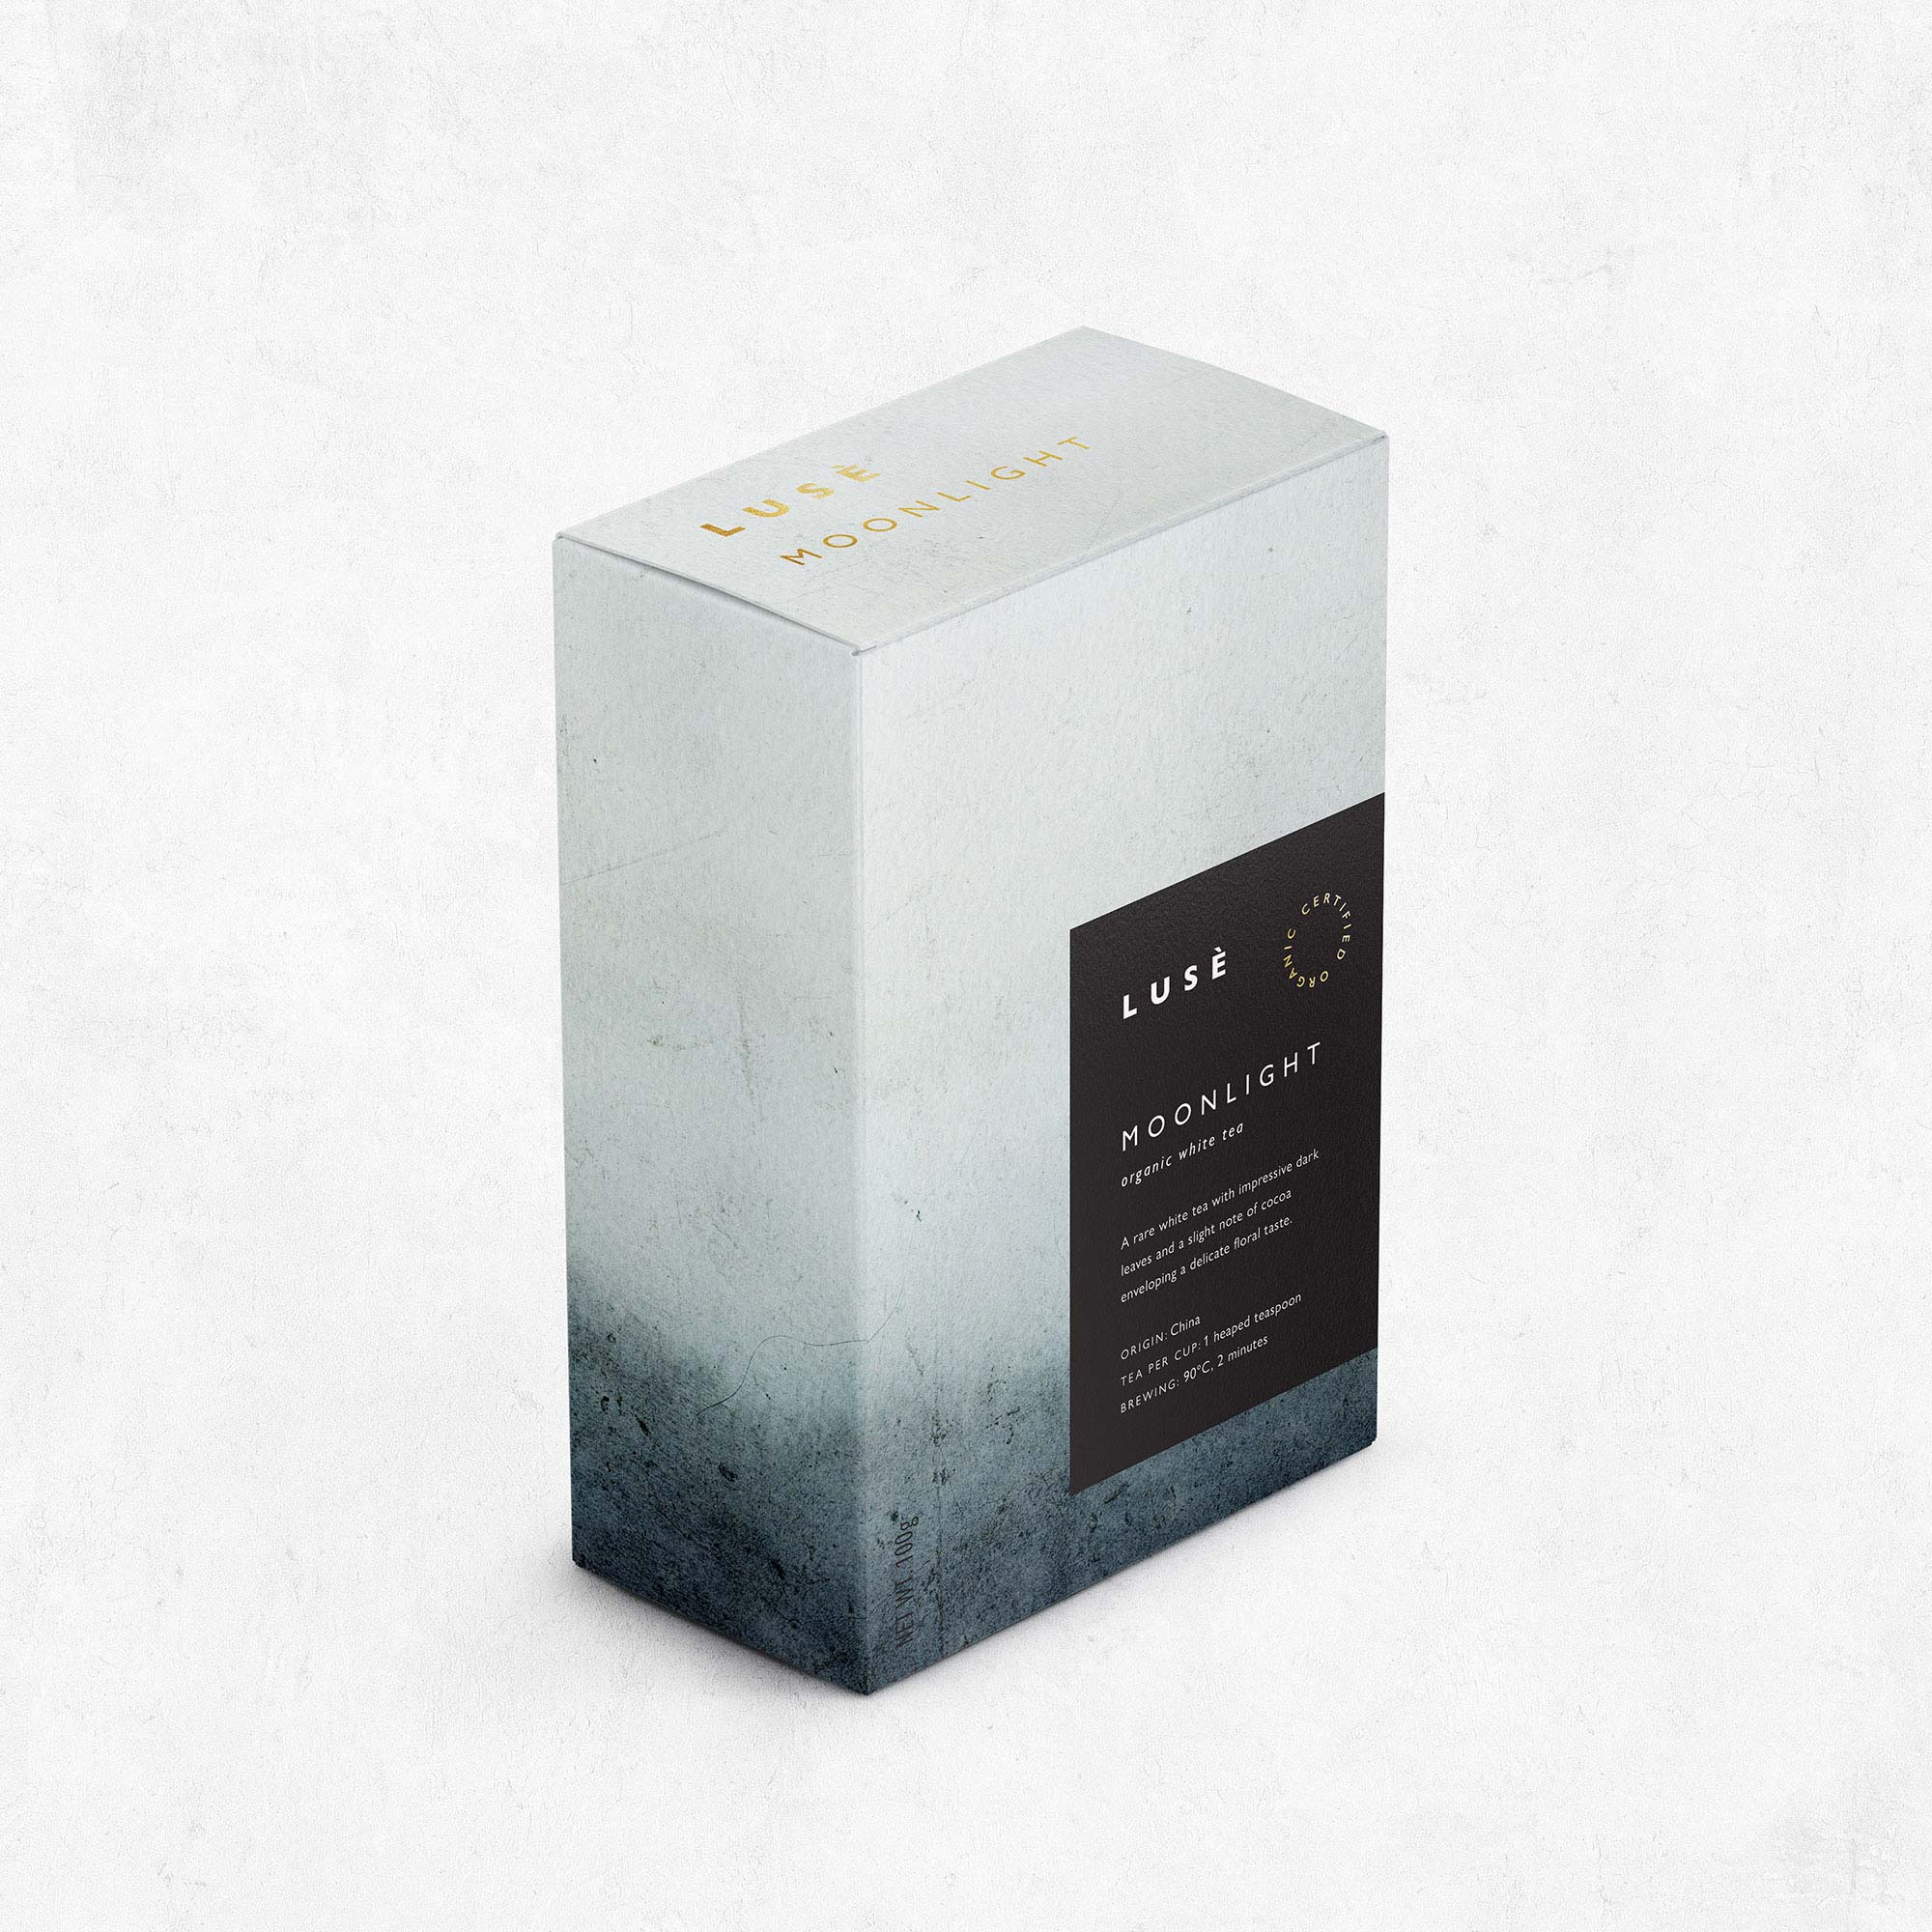 Karolina Król Studio organic tea box design featuring an abstract art background